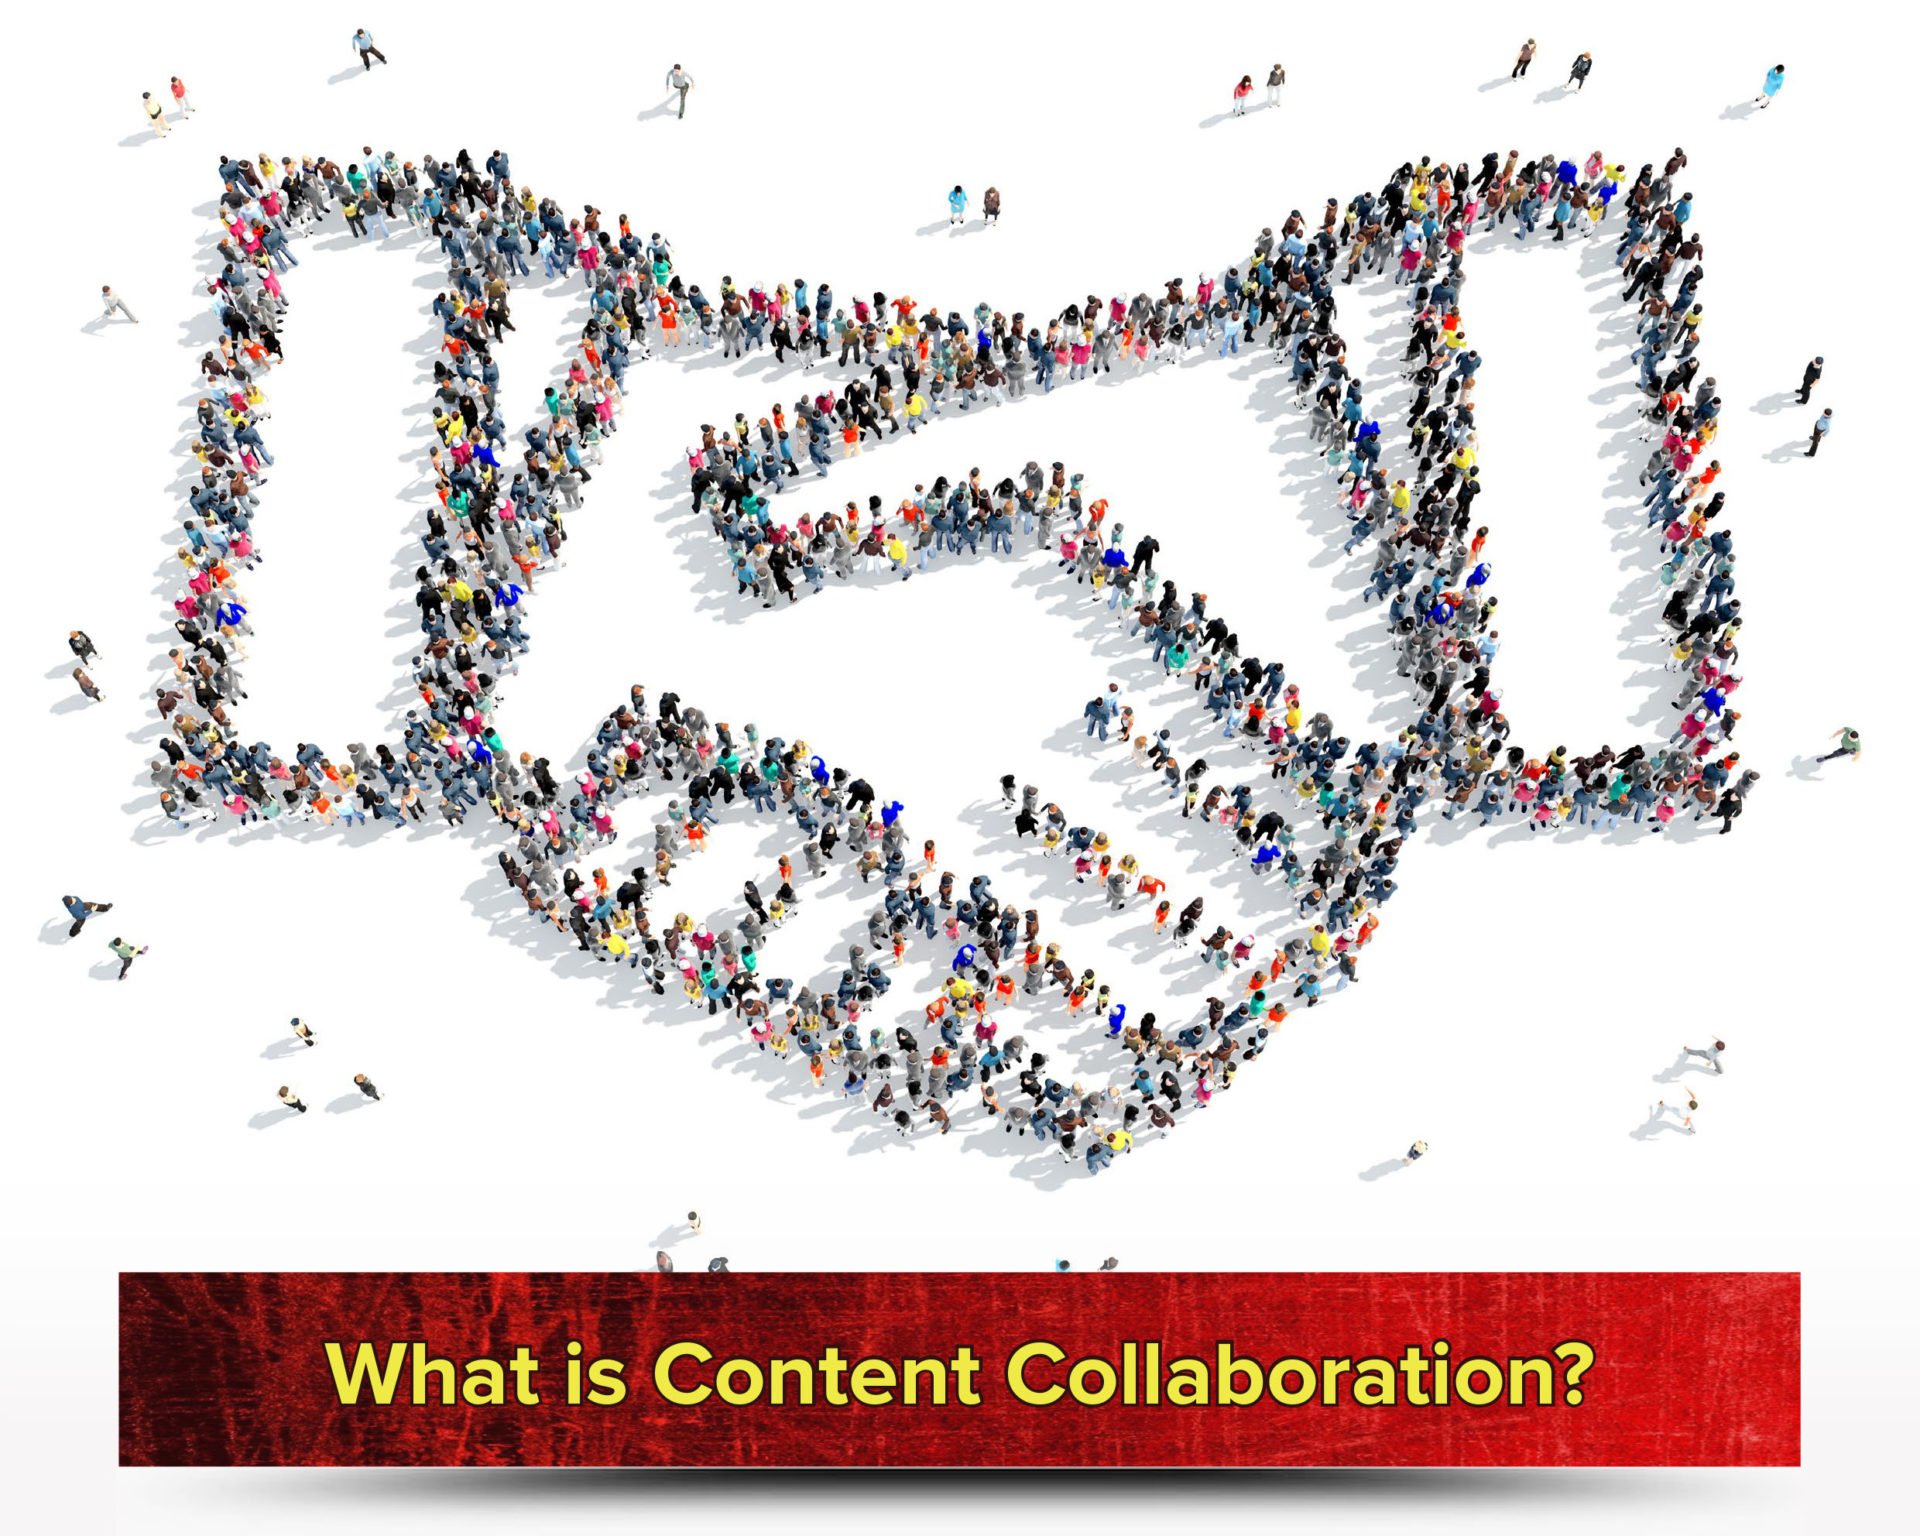 Content Collaboration?